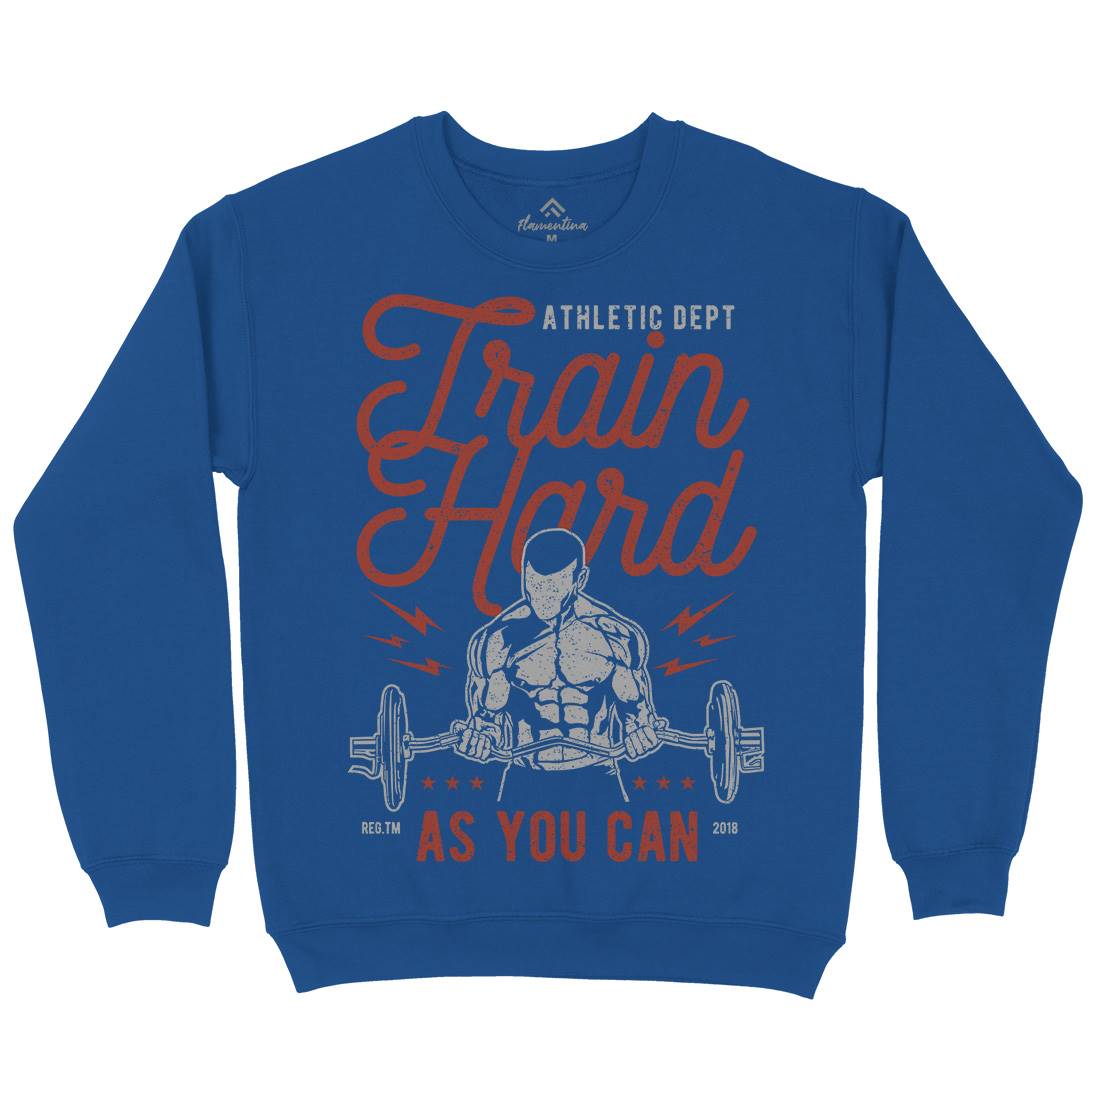 Train Hard Kids Crew Neck Sweatshirt Gym A778